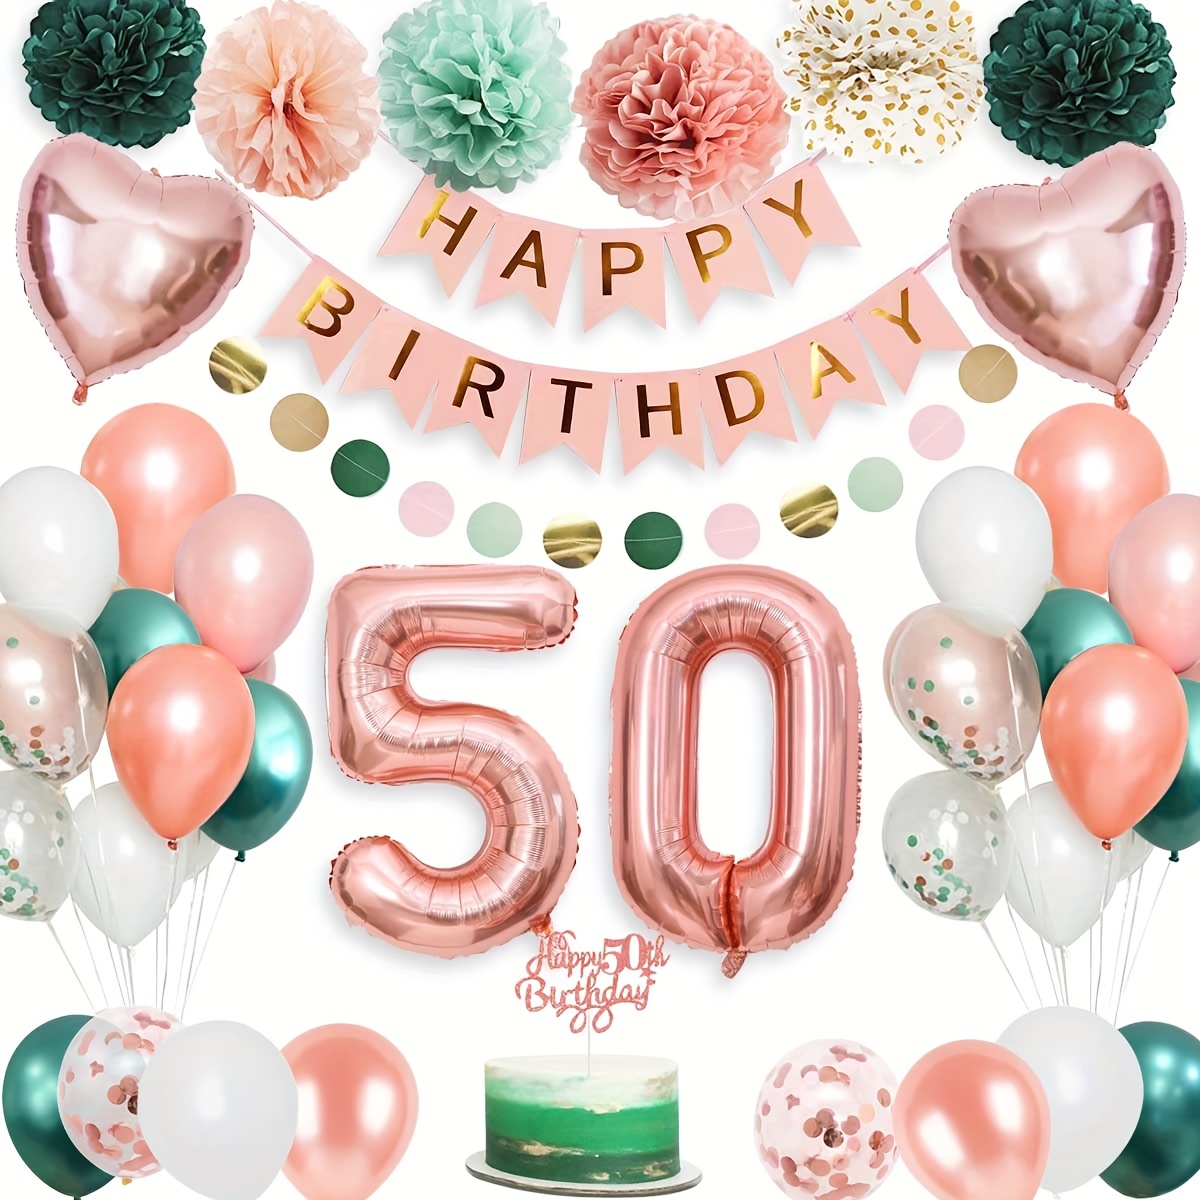 50th birthday rose gold confetti balloons - 50th birthday decoration